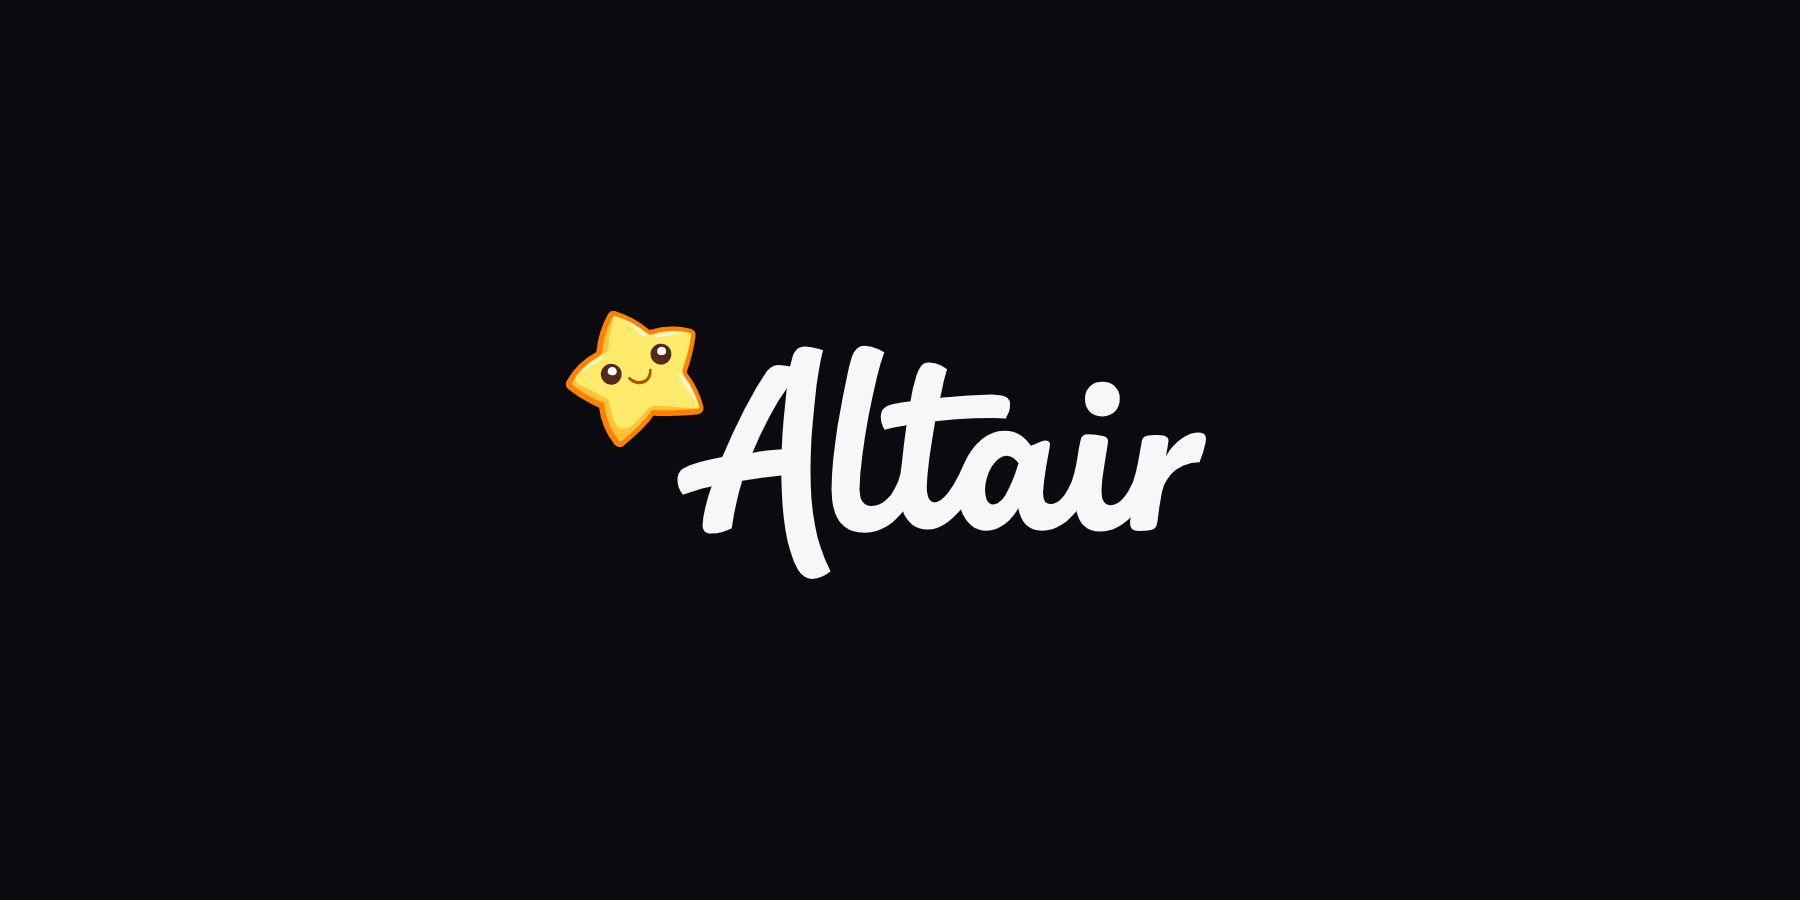 altair logo featured